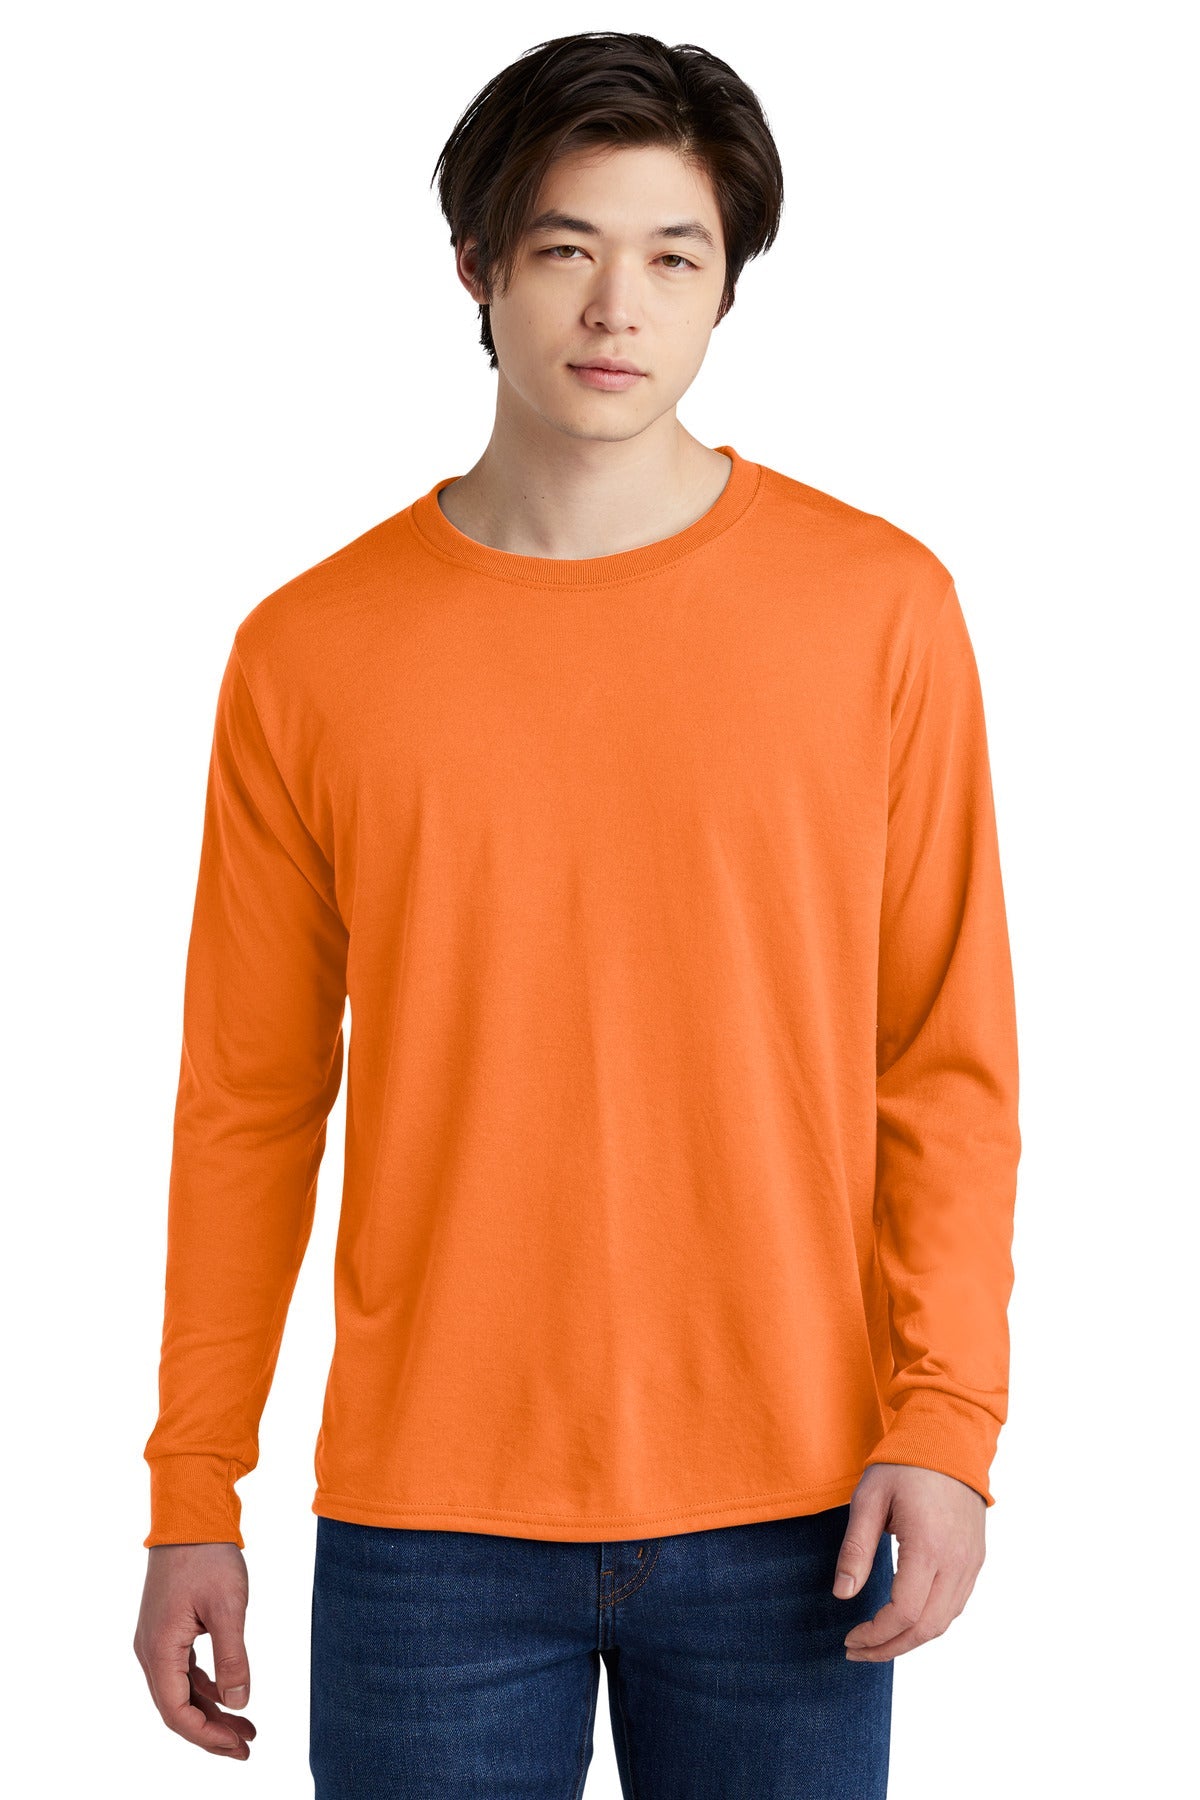 JERZEES® Dri-Power® 100% Polyester Long Sleeve T-Shirt 21LS - DFW Impression